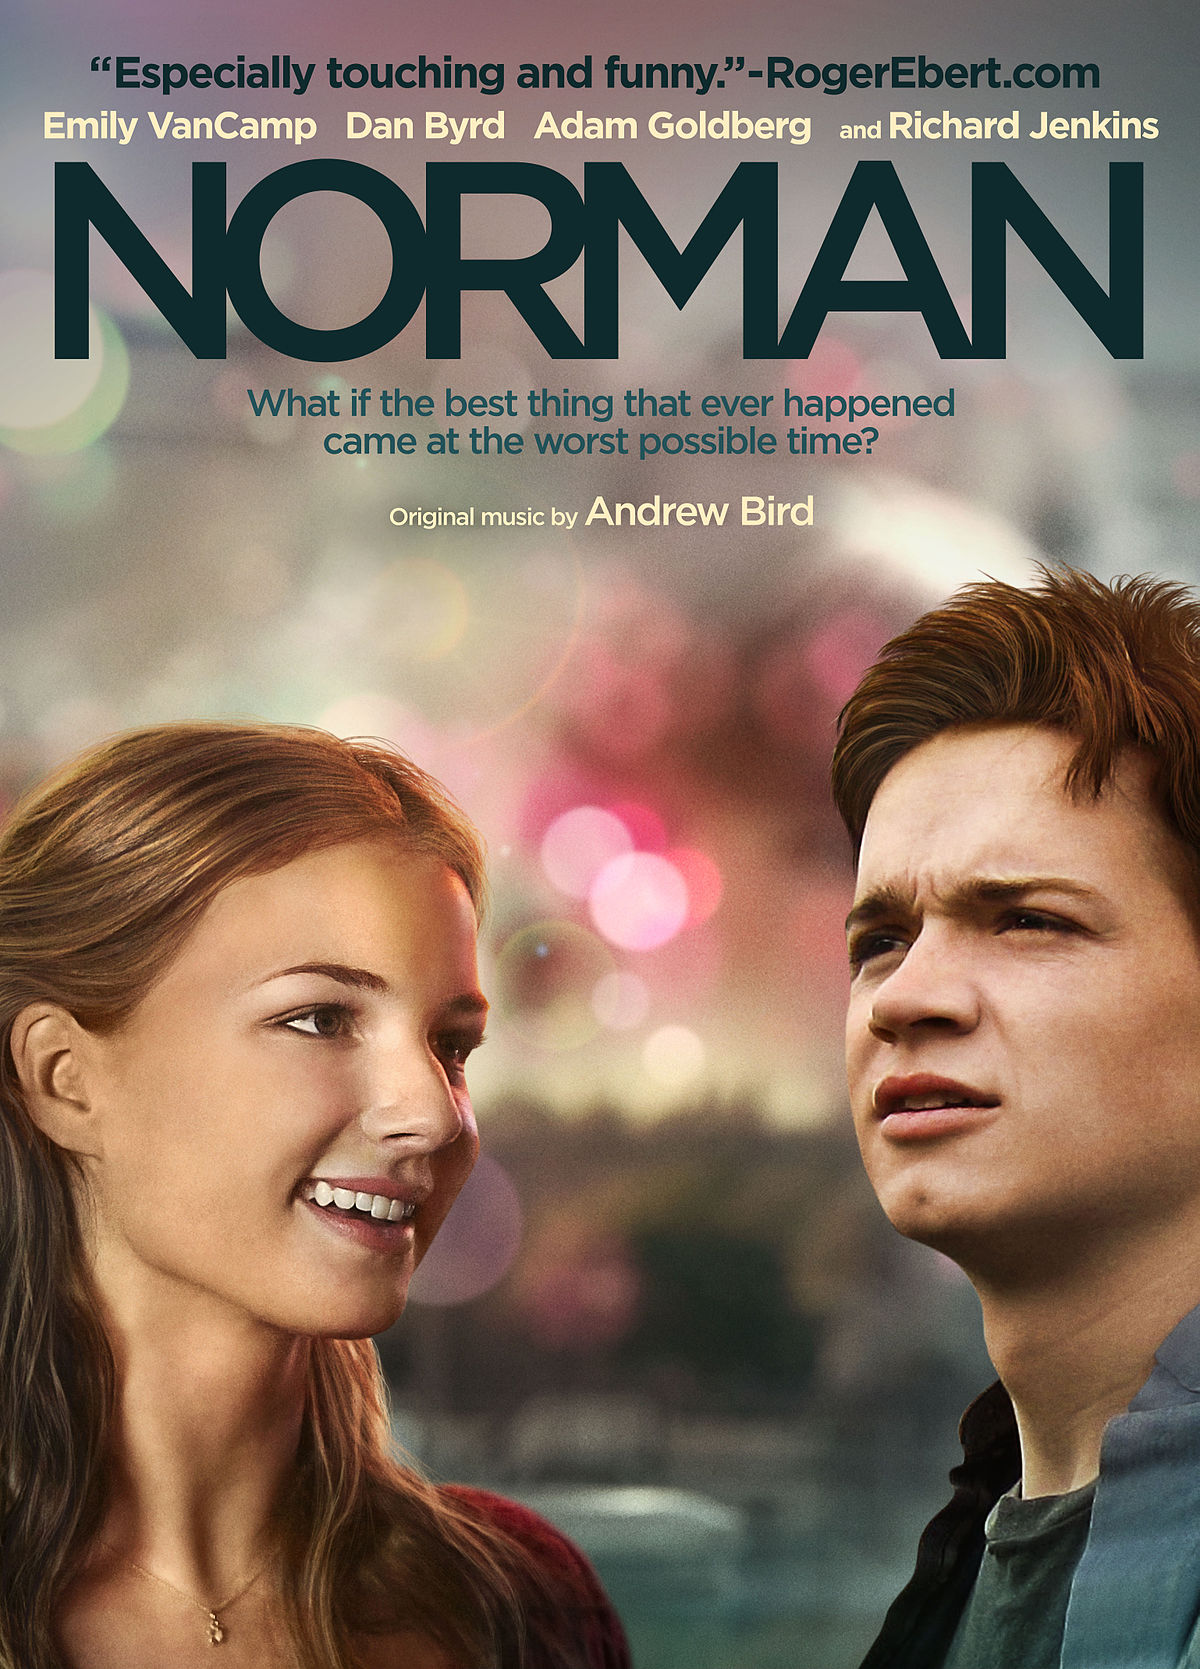 Norman (film) - Wikipedia